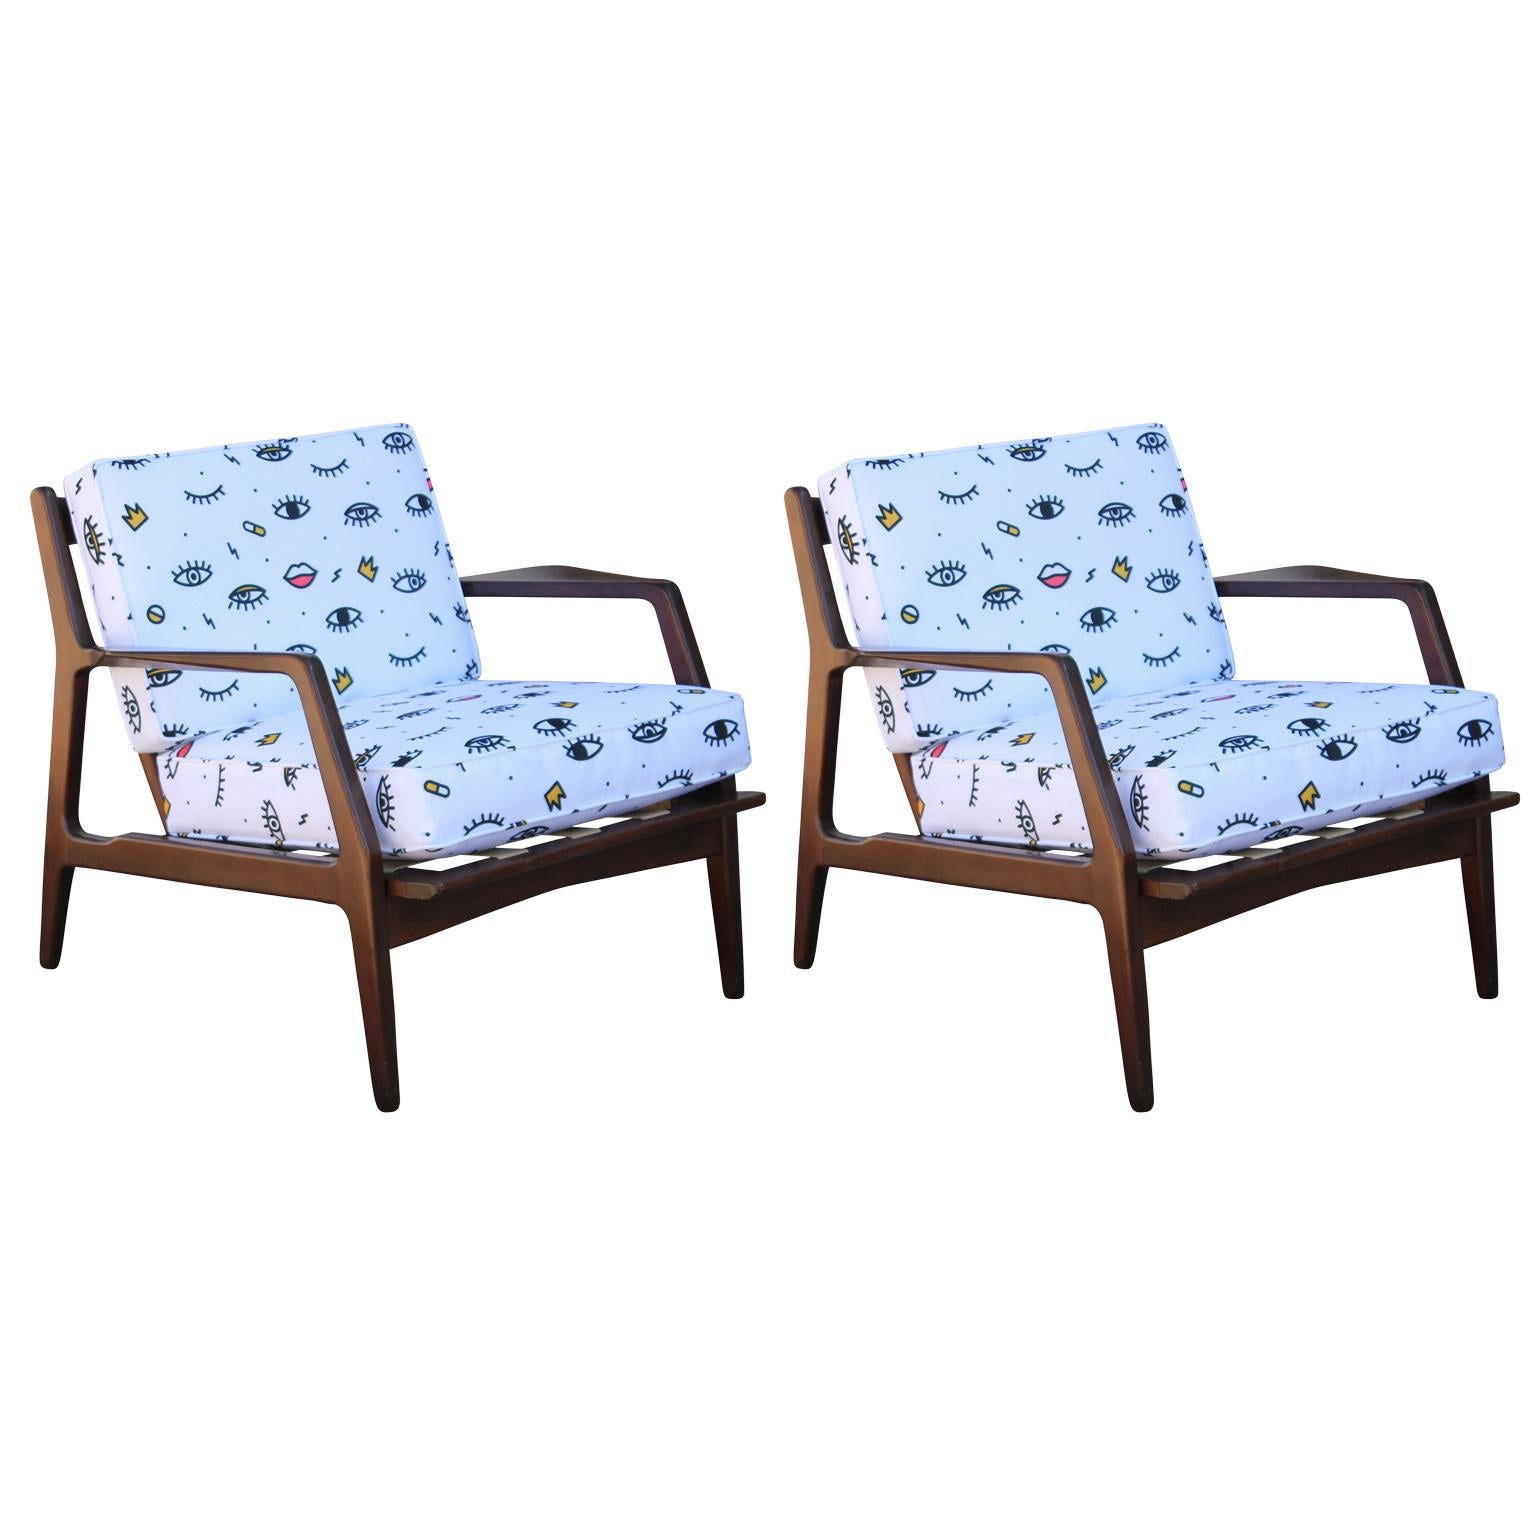 Pair of Danish Modern Ib Kofod-Larsen for Selig Lounge Chairs in Eye Fabric